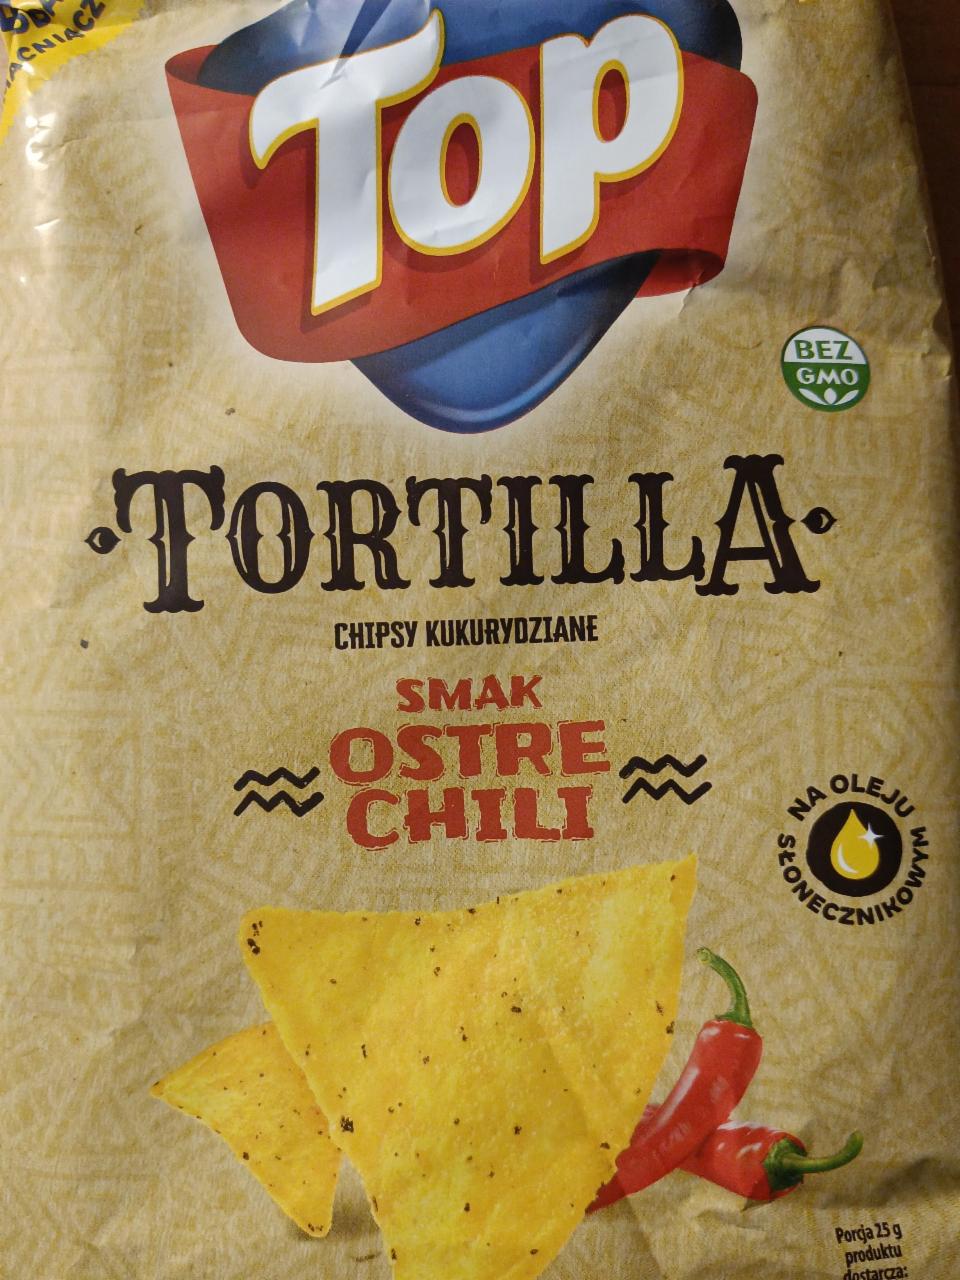 Fotografie - Tortilla chipsy kukurydziane smak ostre chili TOP